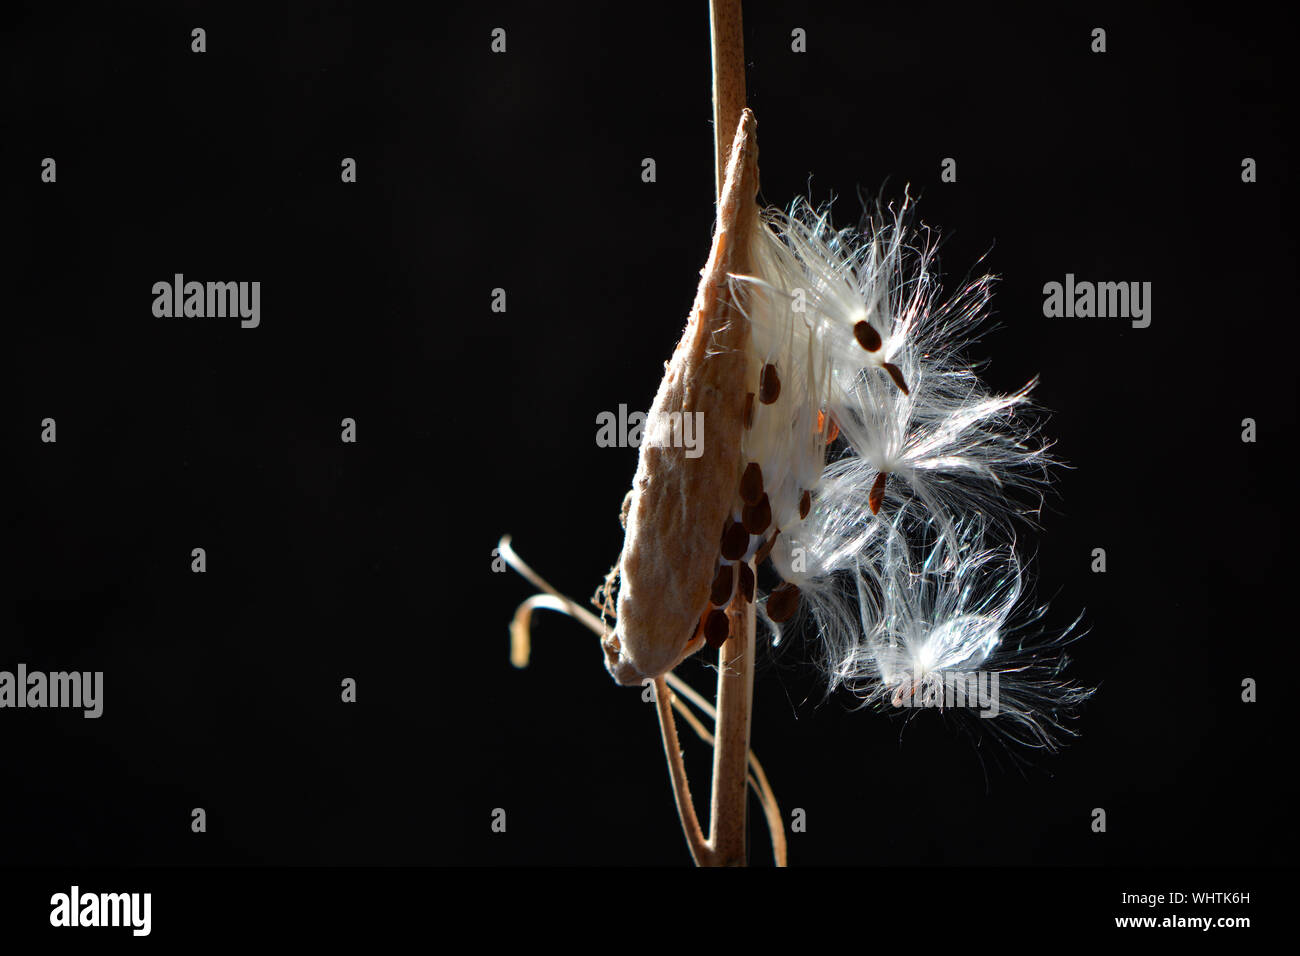 Common Milkweed (Asclepias syriaca) pod whith seeds on black background Stock Photo